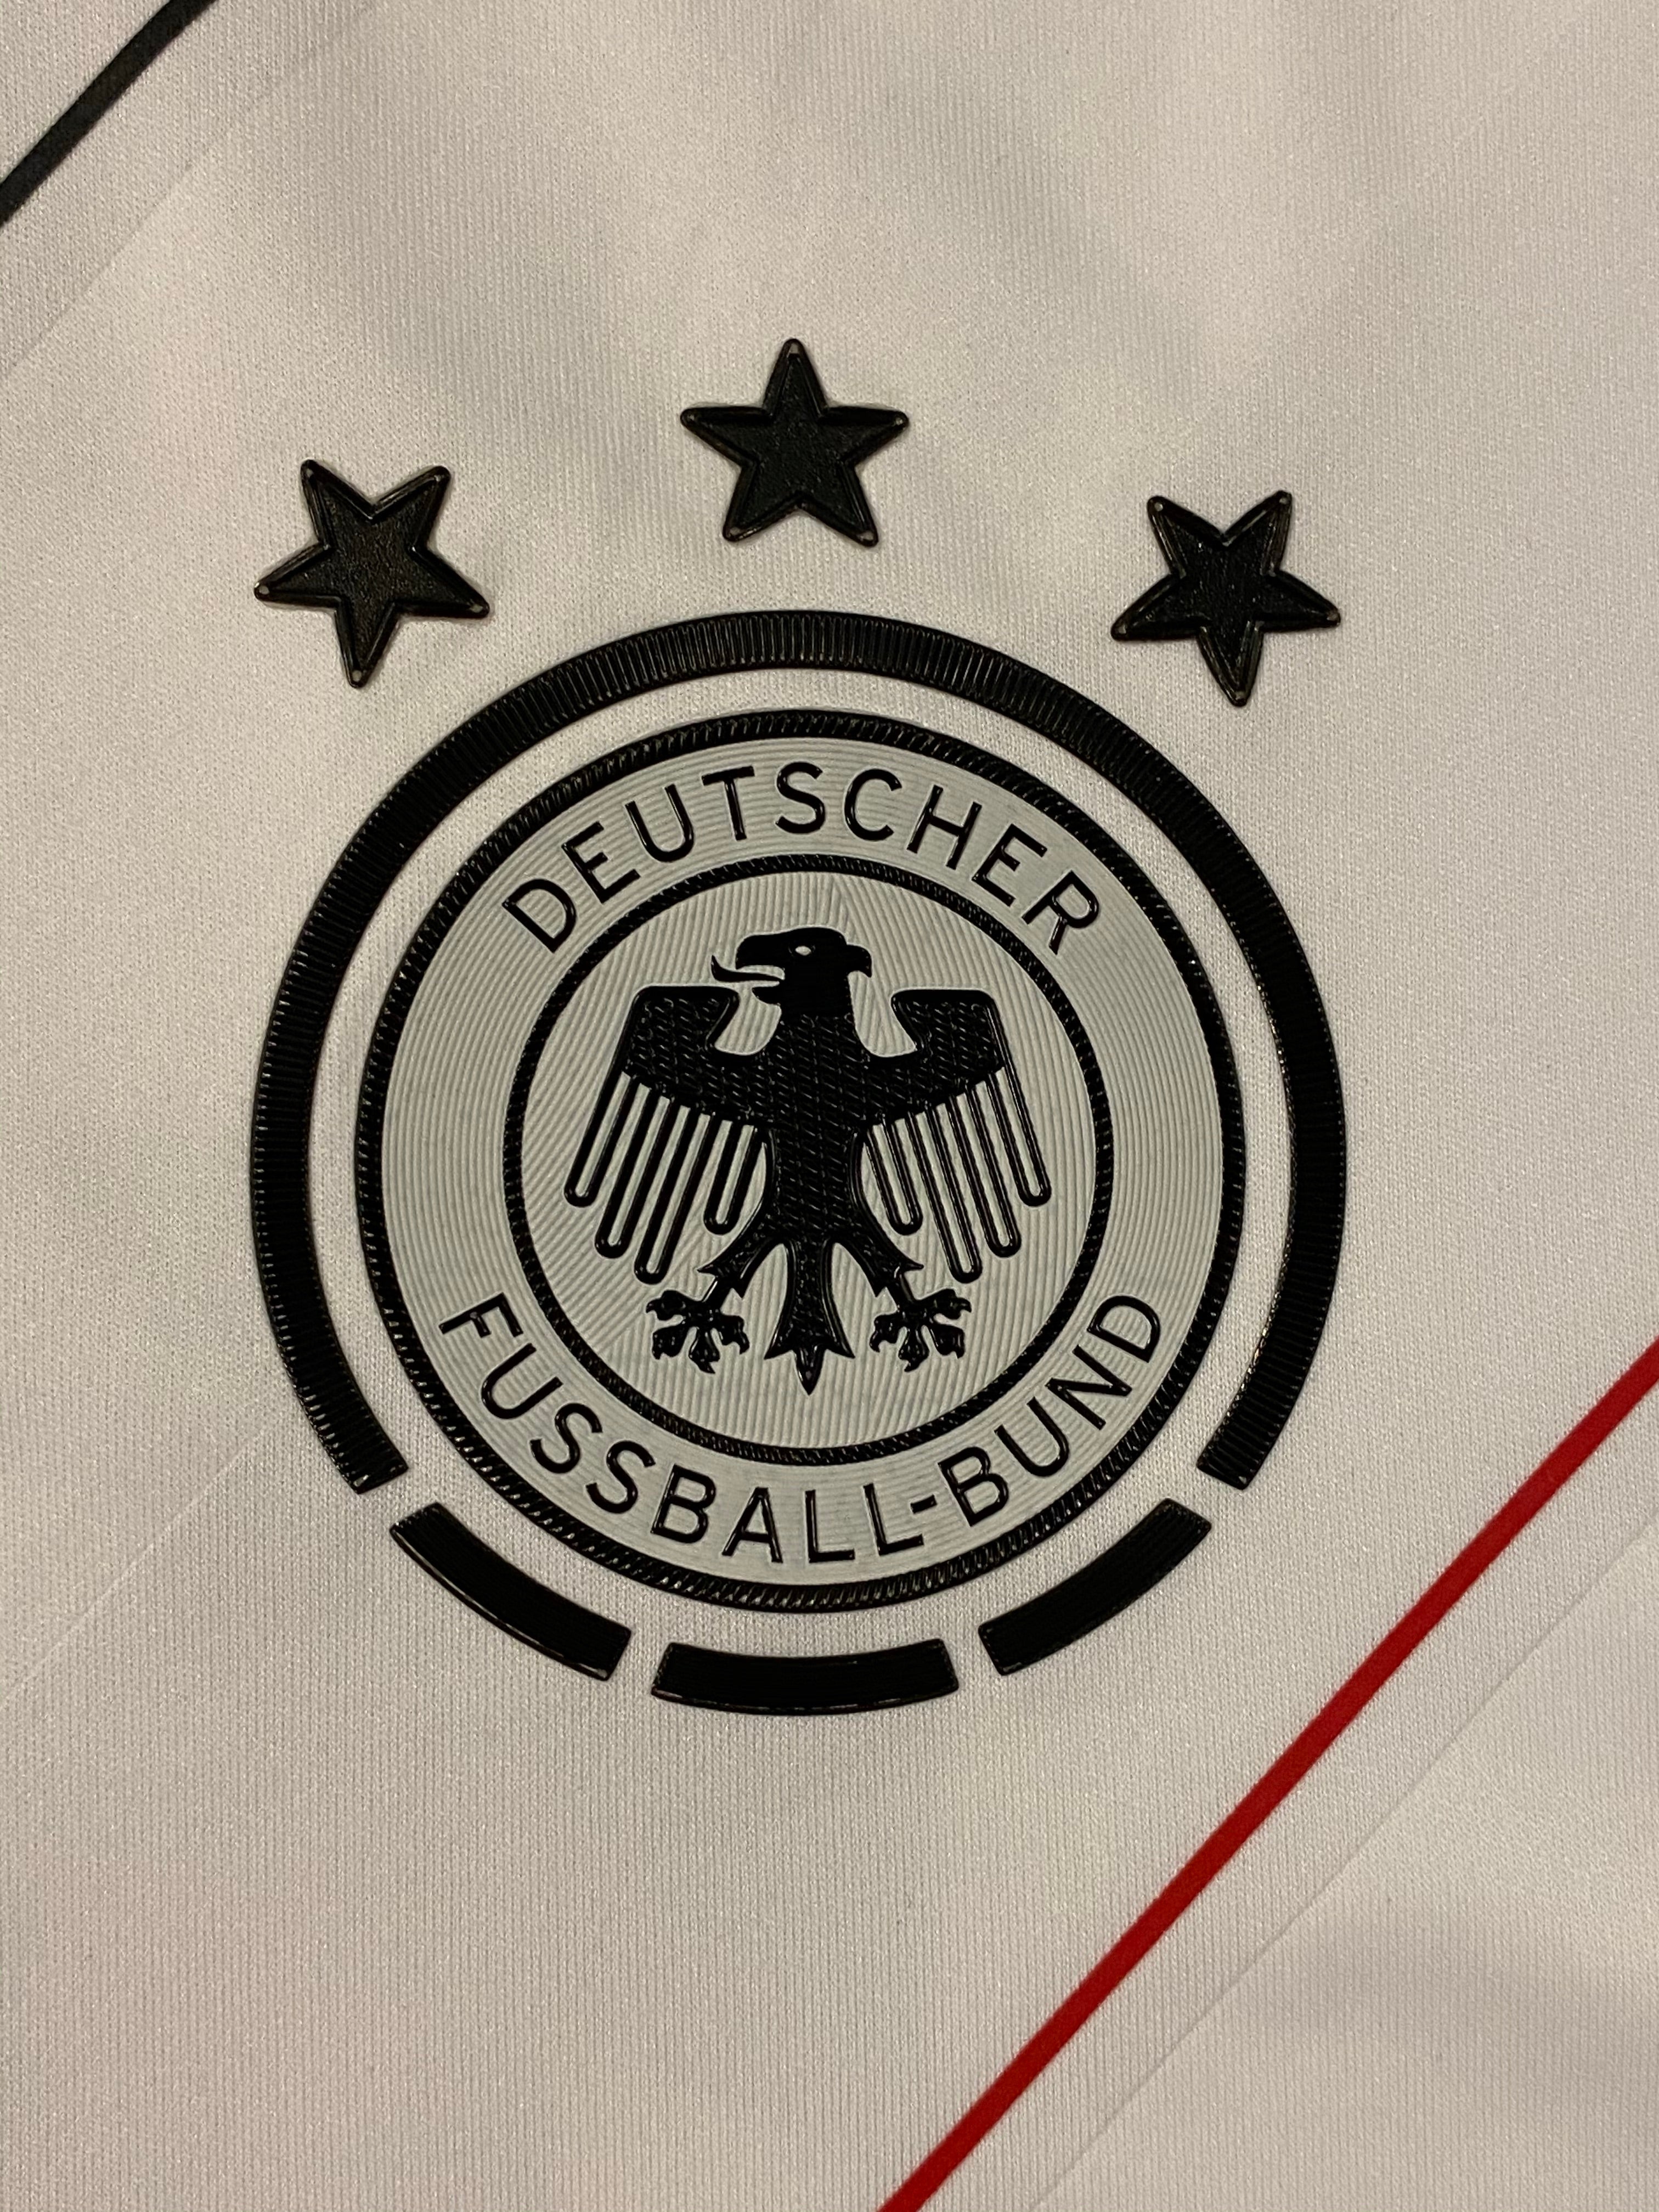 Camiseta de local de Alemania 2012/13 Podolski #10 (XL) 8.5/10